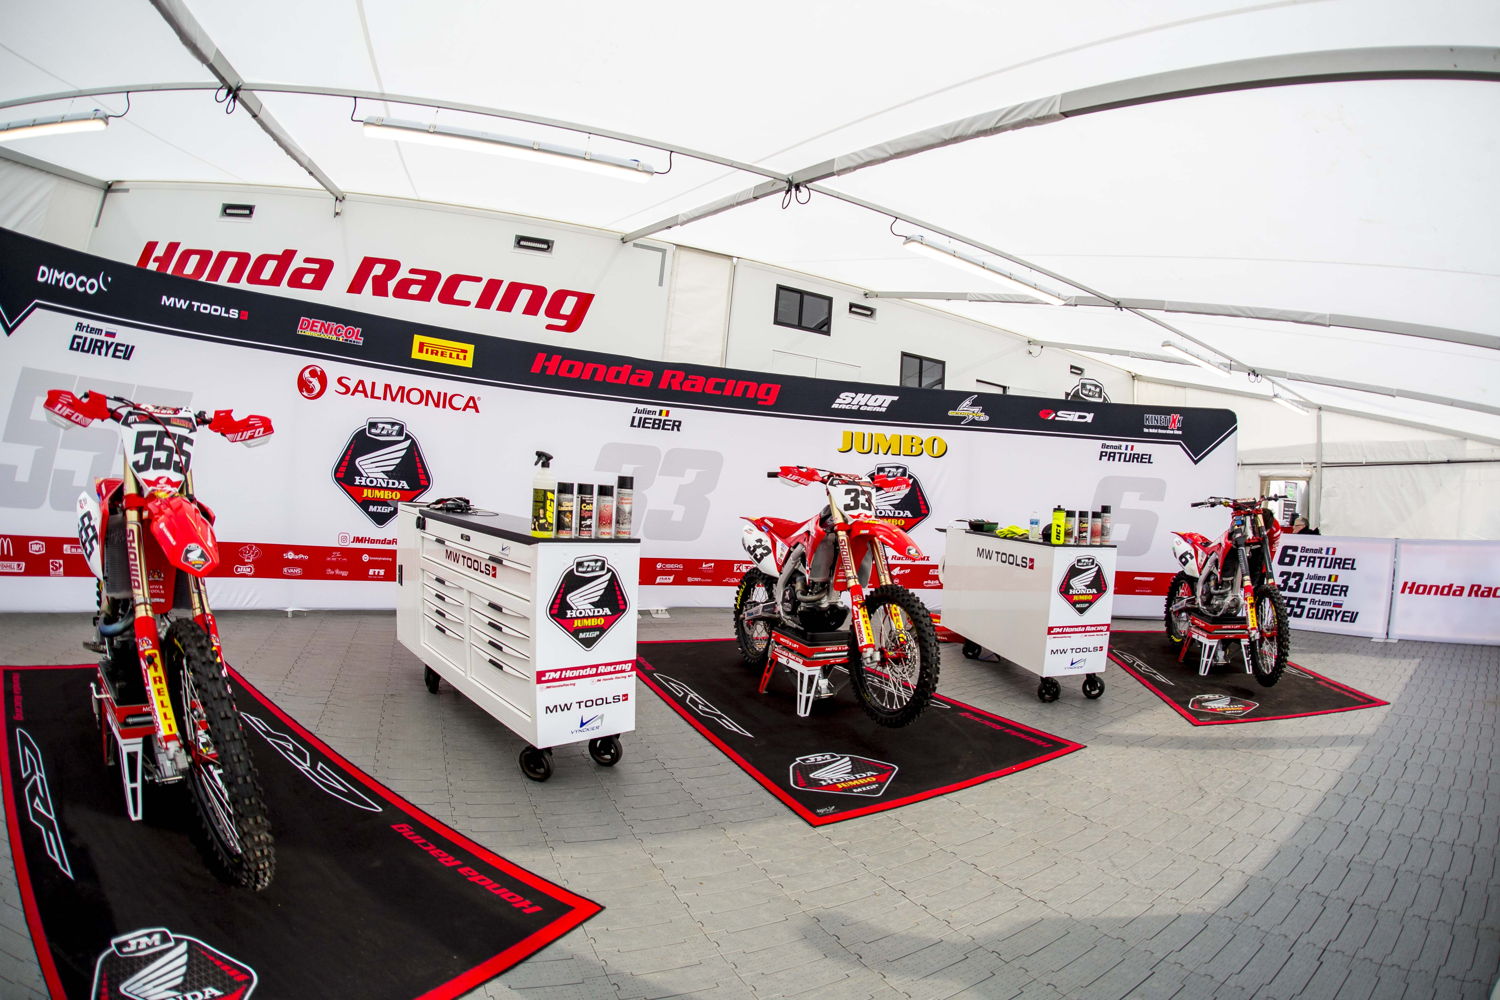 Paddock setup JM Honda Racing, credit: CDS